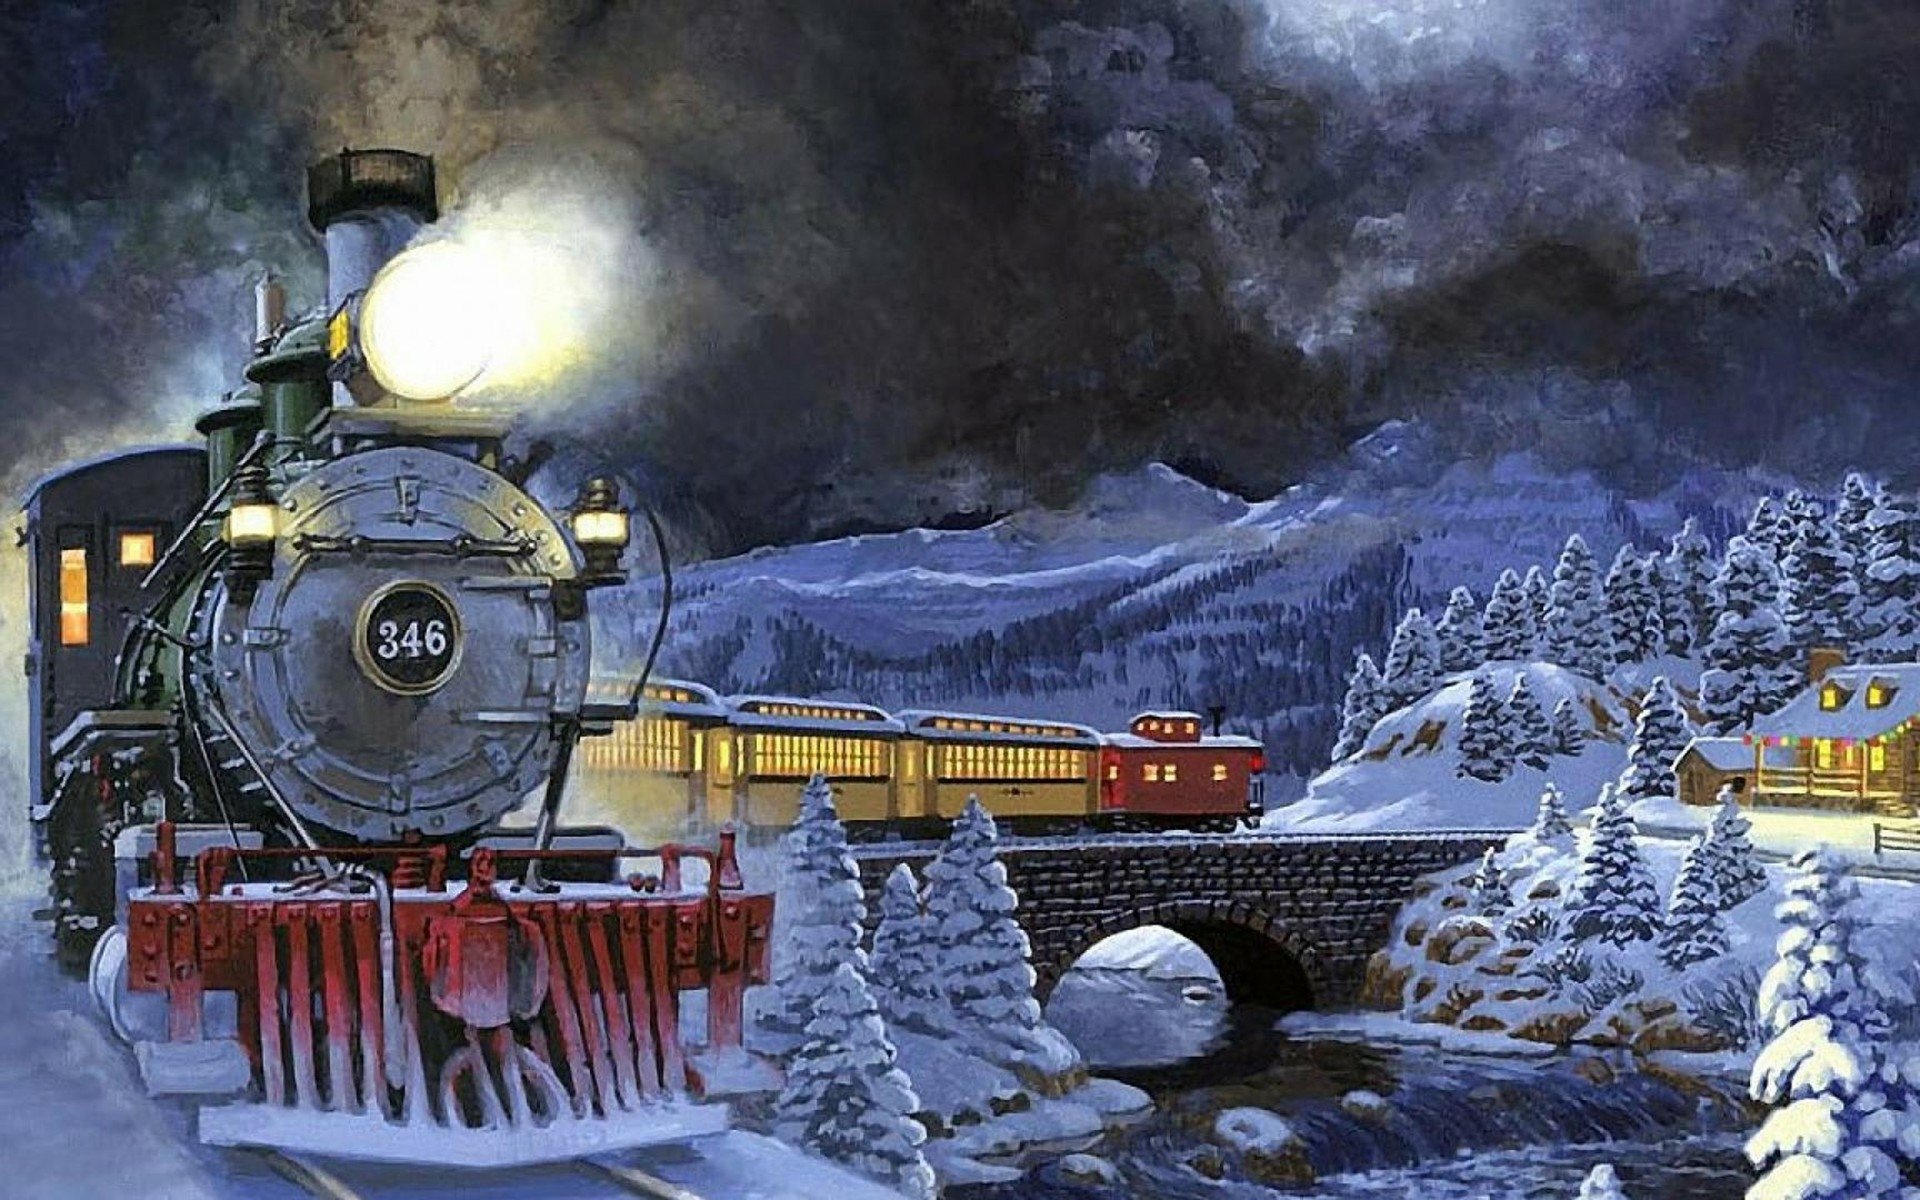  Train  through Winter  Mountain Town HD Wallpaper  